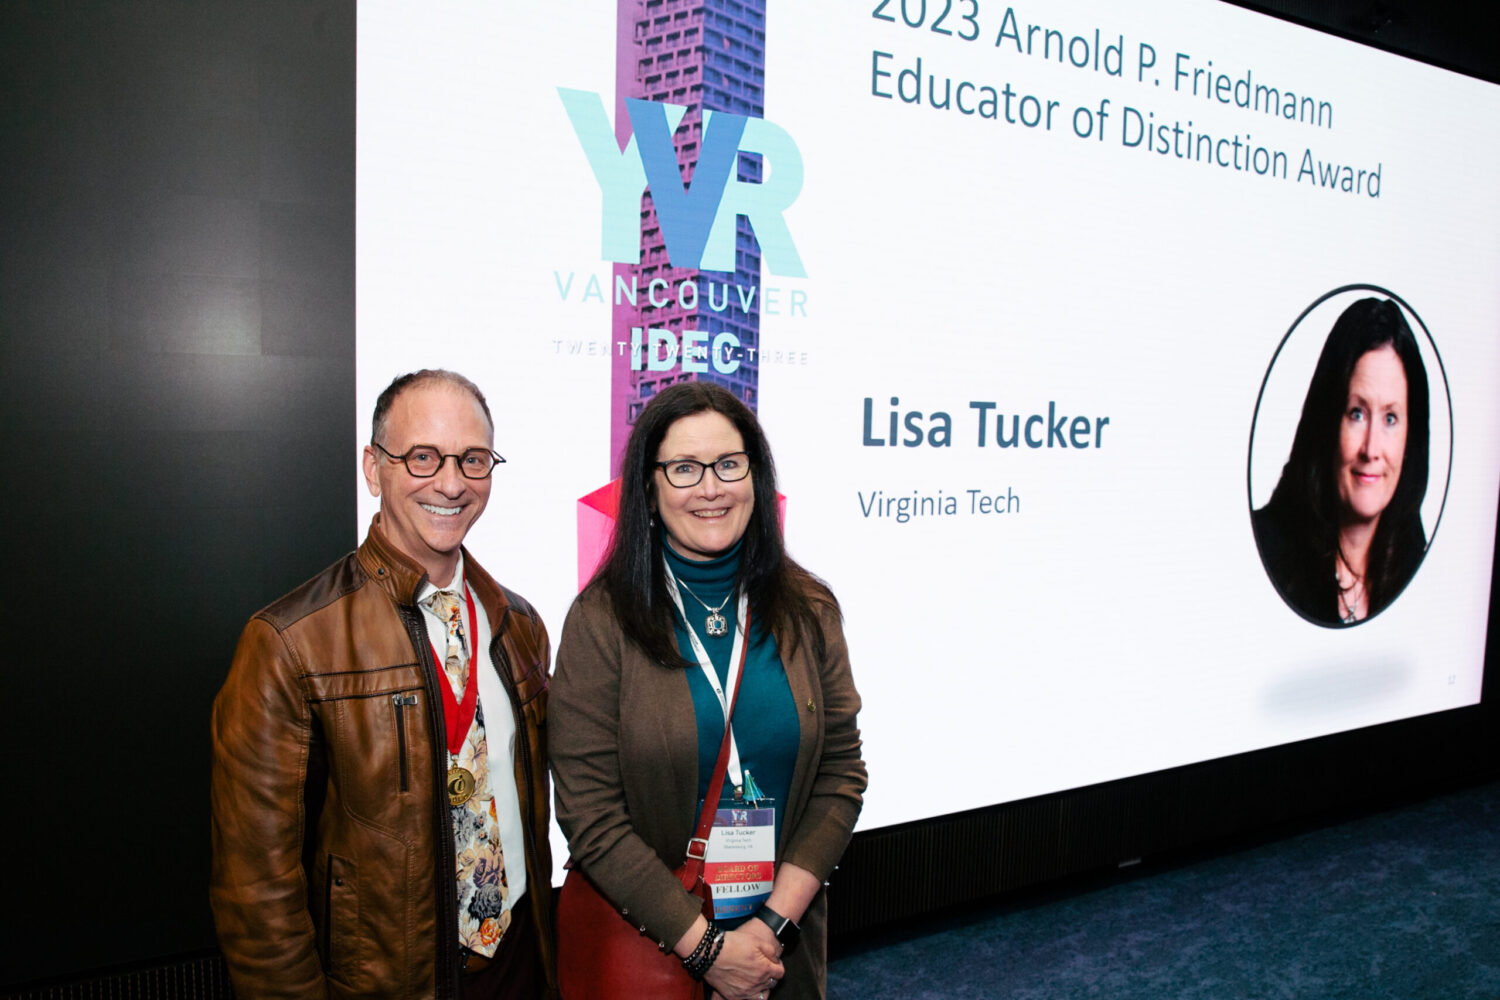 Lisa Tucker, recipient of 2023 Arnold P. Friedmann Educator of Distinction Award.